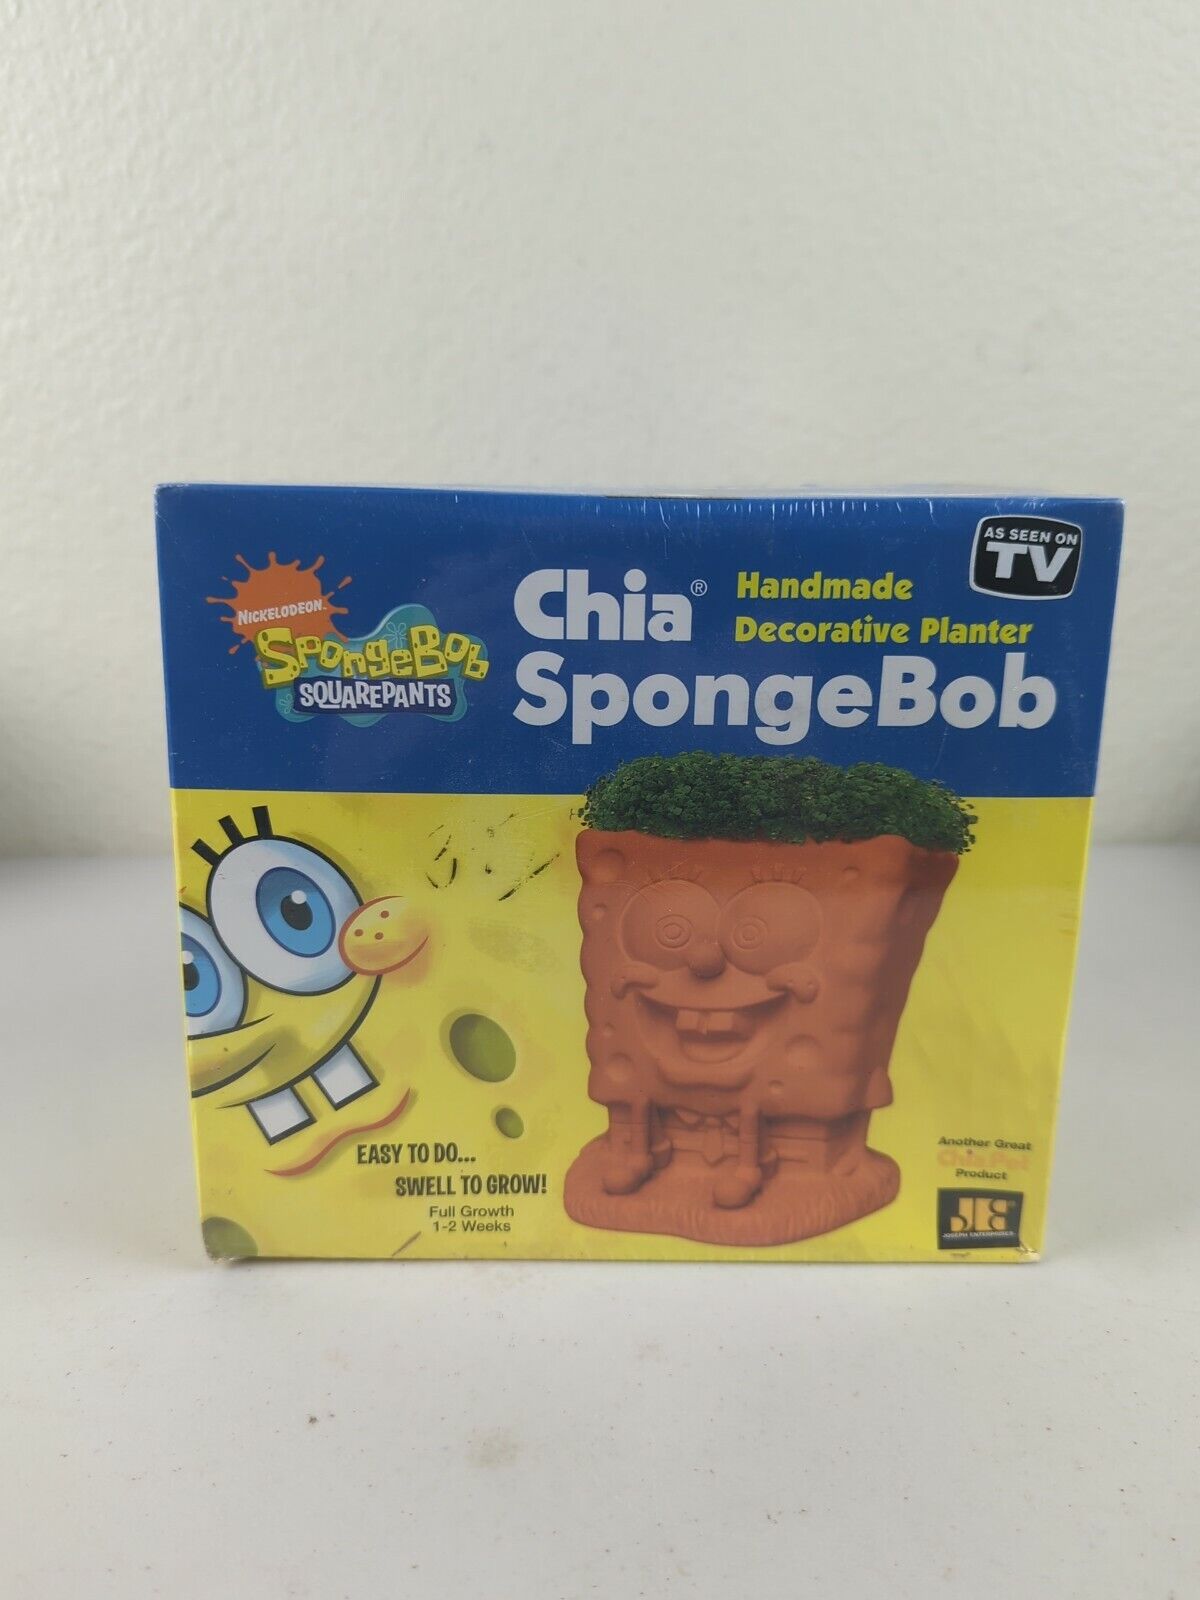 Spongebob-Chia Pet 2012 Nickelodeon SpongeBob Chia Pet Decorative Planter Gift